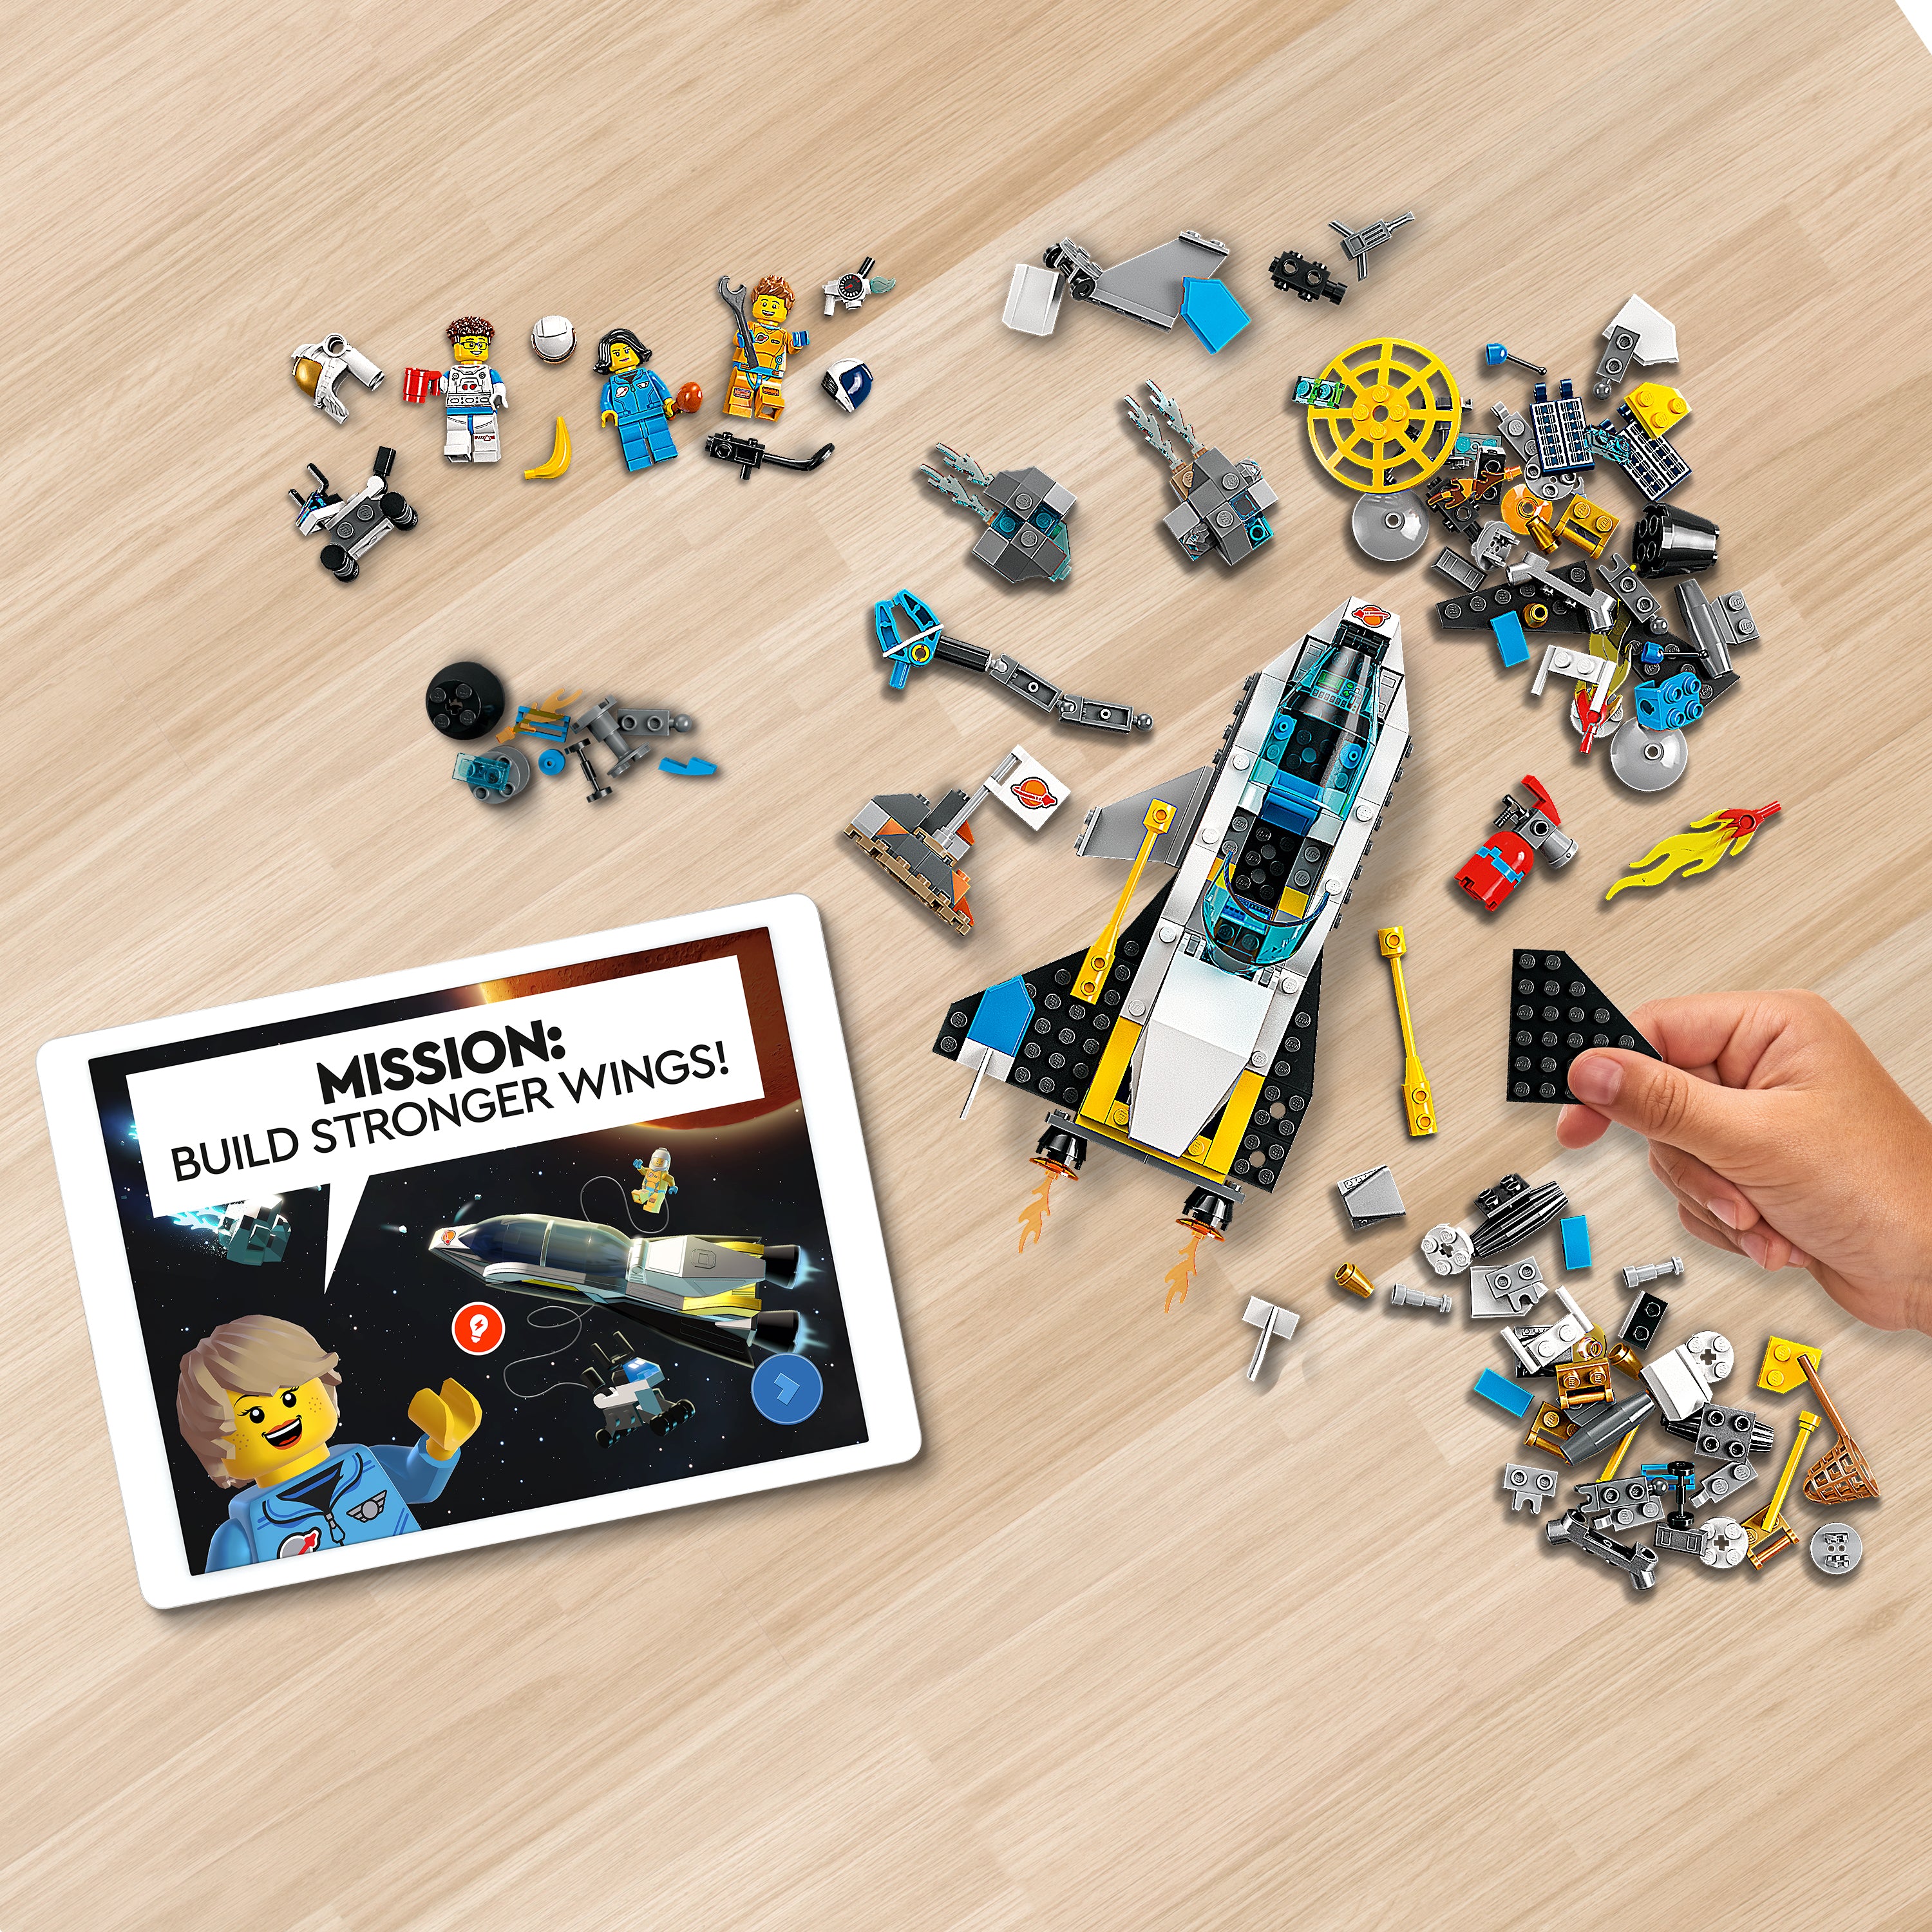 Lego 60354 Mars Spacecraft Exploration Missions